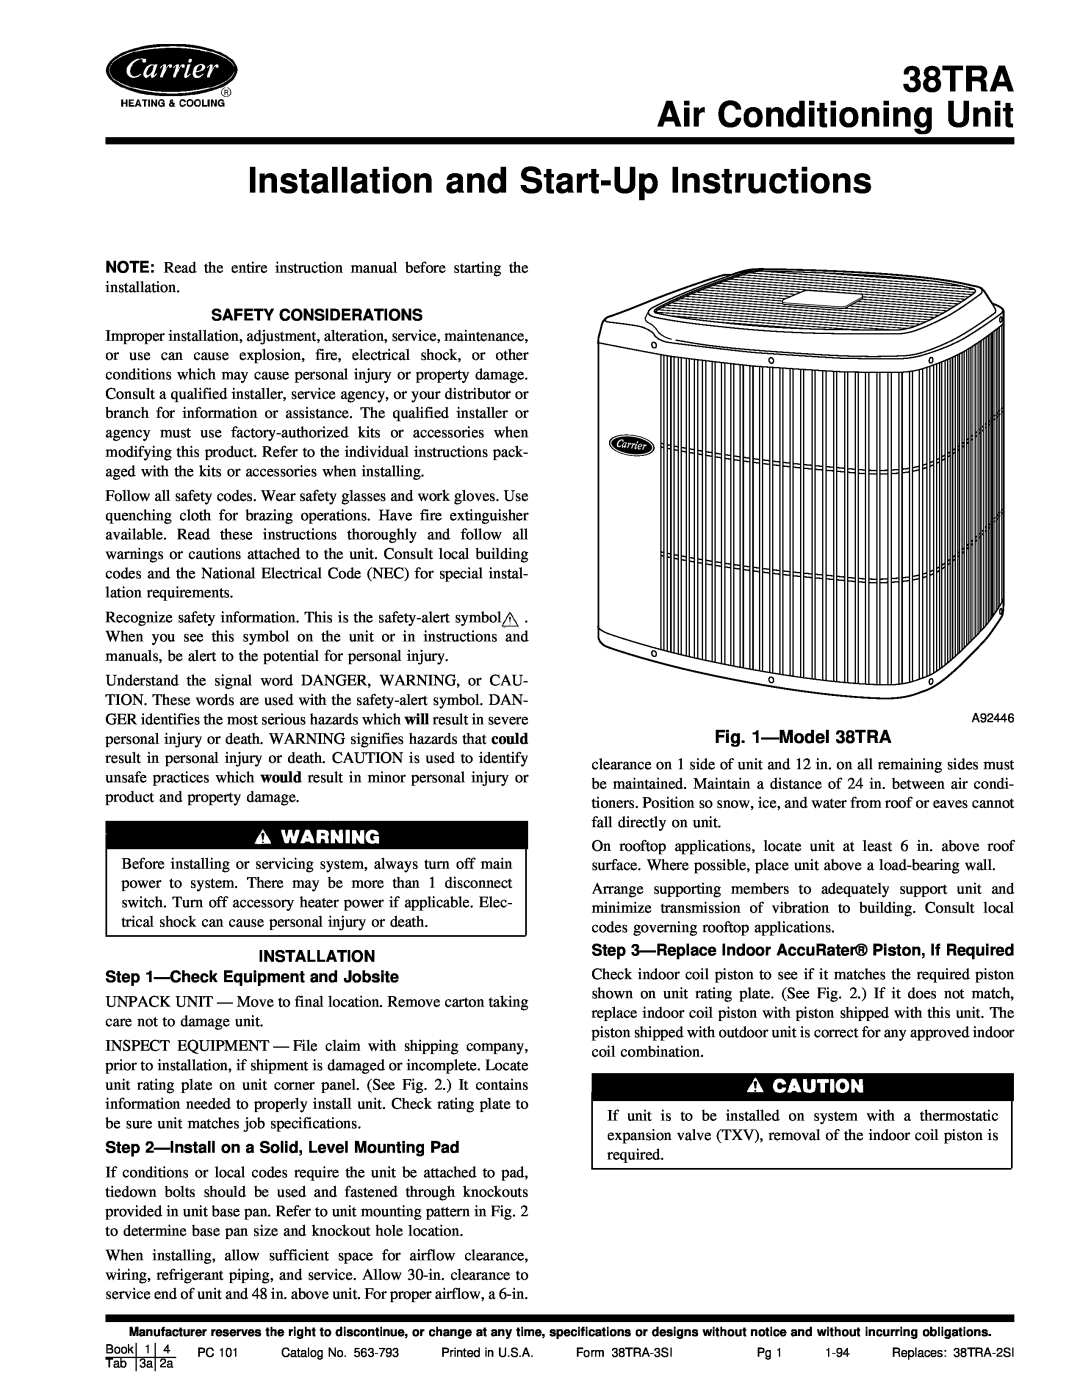 Carrier instruction manual ÐModel 38TRA, Safety Considerations, INSTALLATION ÐCheck Equipment and Jobsite 